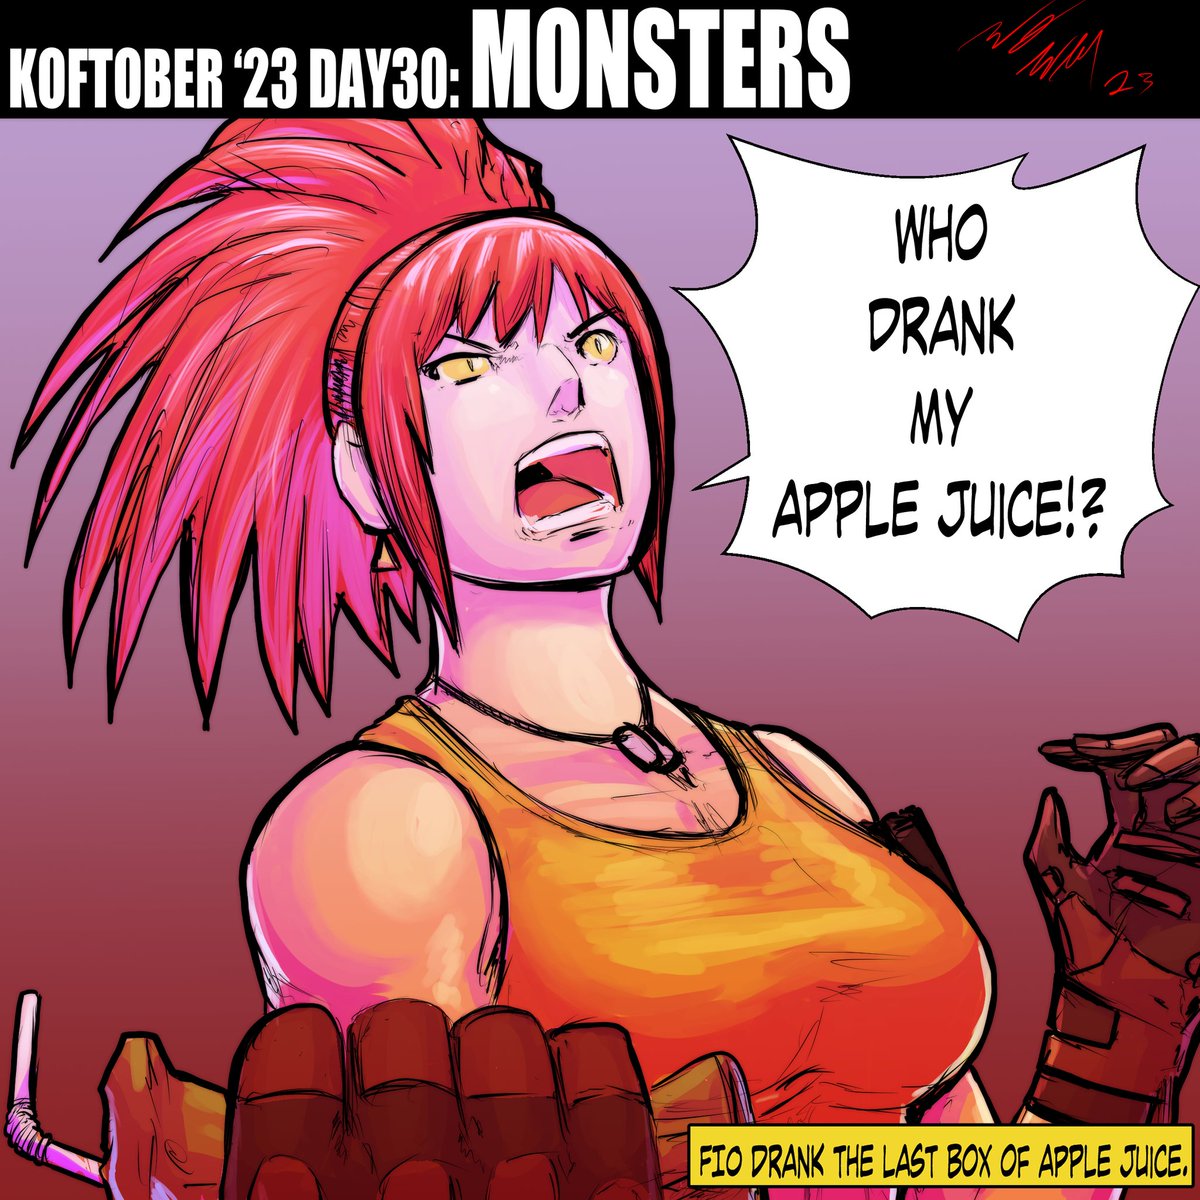 KOFTOBER '23 DAY30: 
Monsters 
This is a callback to koftober '22 Fury.
#leonaheidern #orochileona #kofxv #KOFtober #ikariwarriors  #格ゲーキャラ描こうぜ